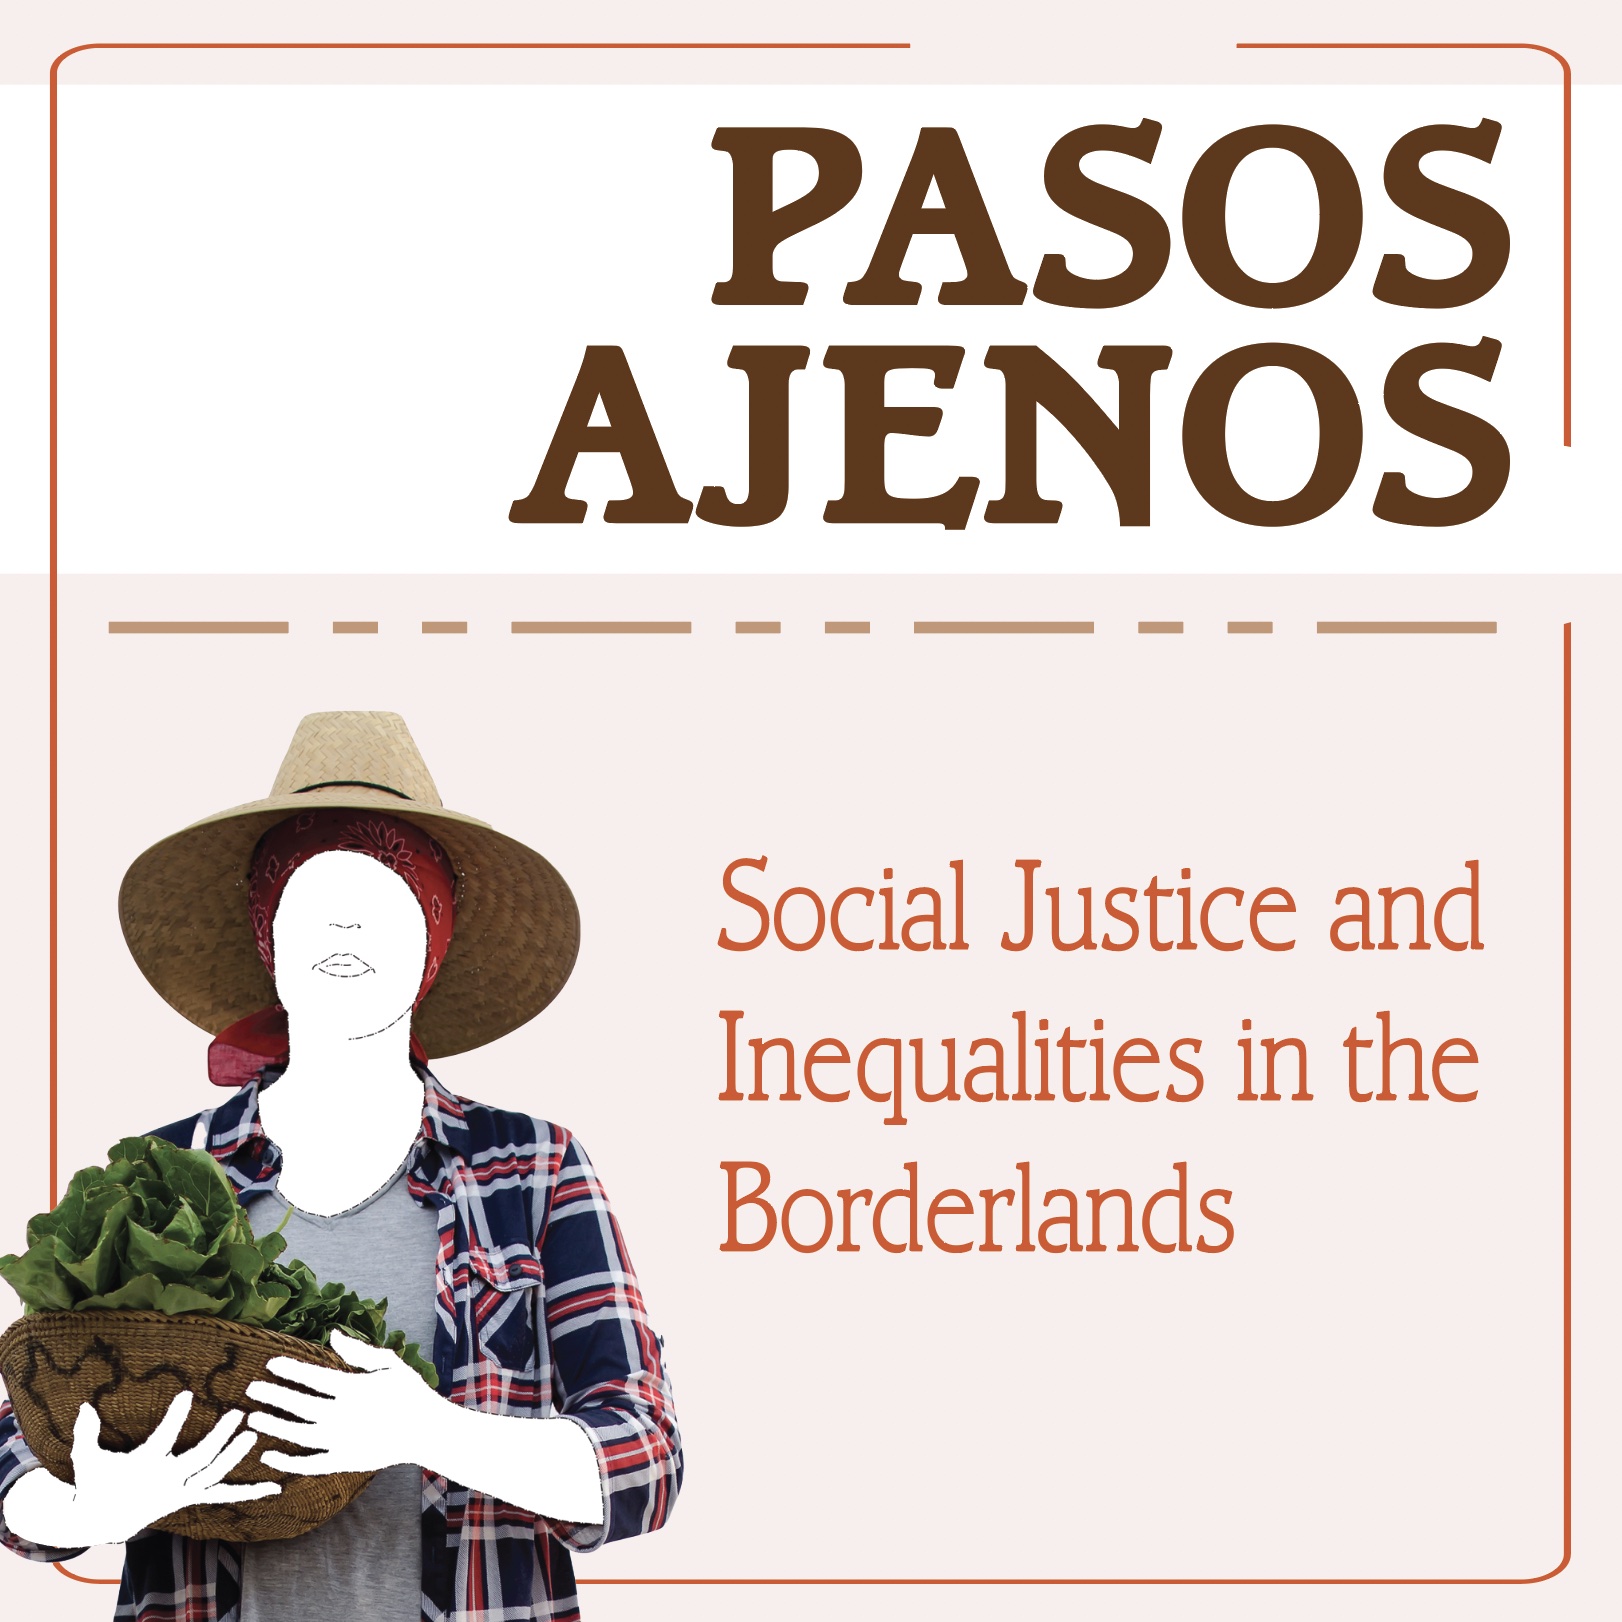 Pasos-Ajenos-website-image.jpg